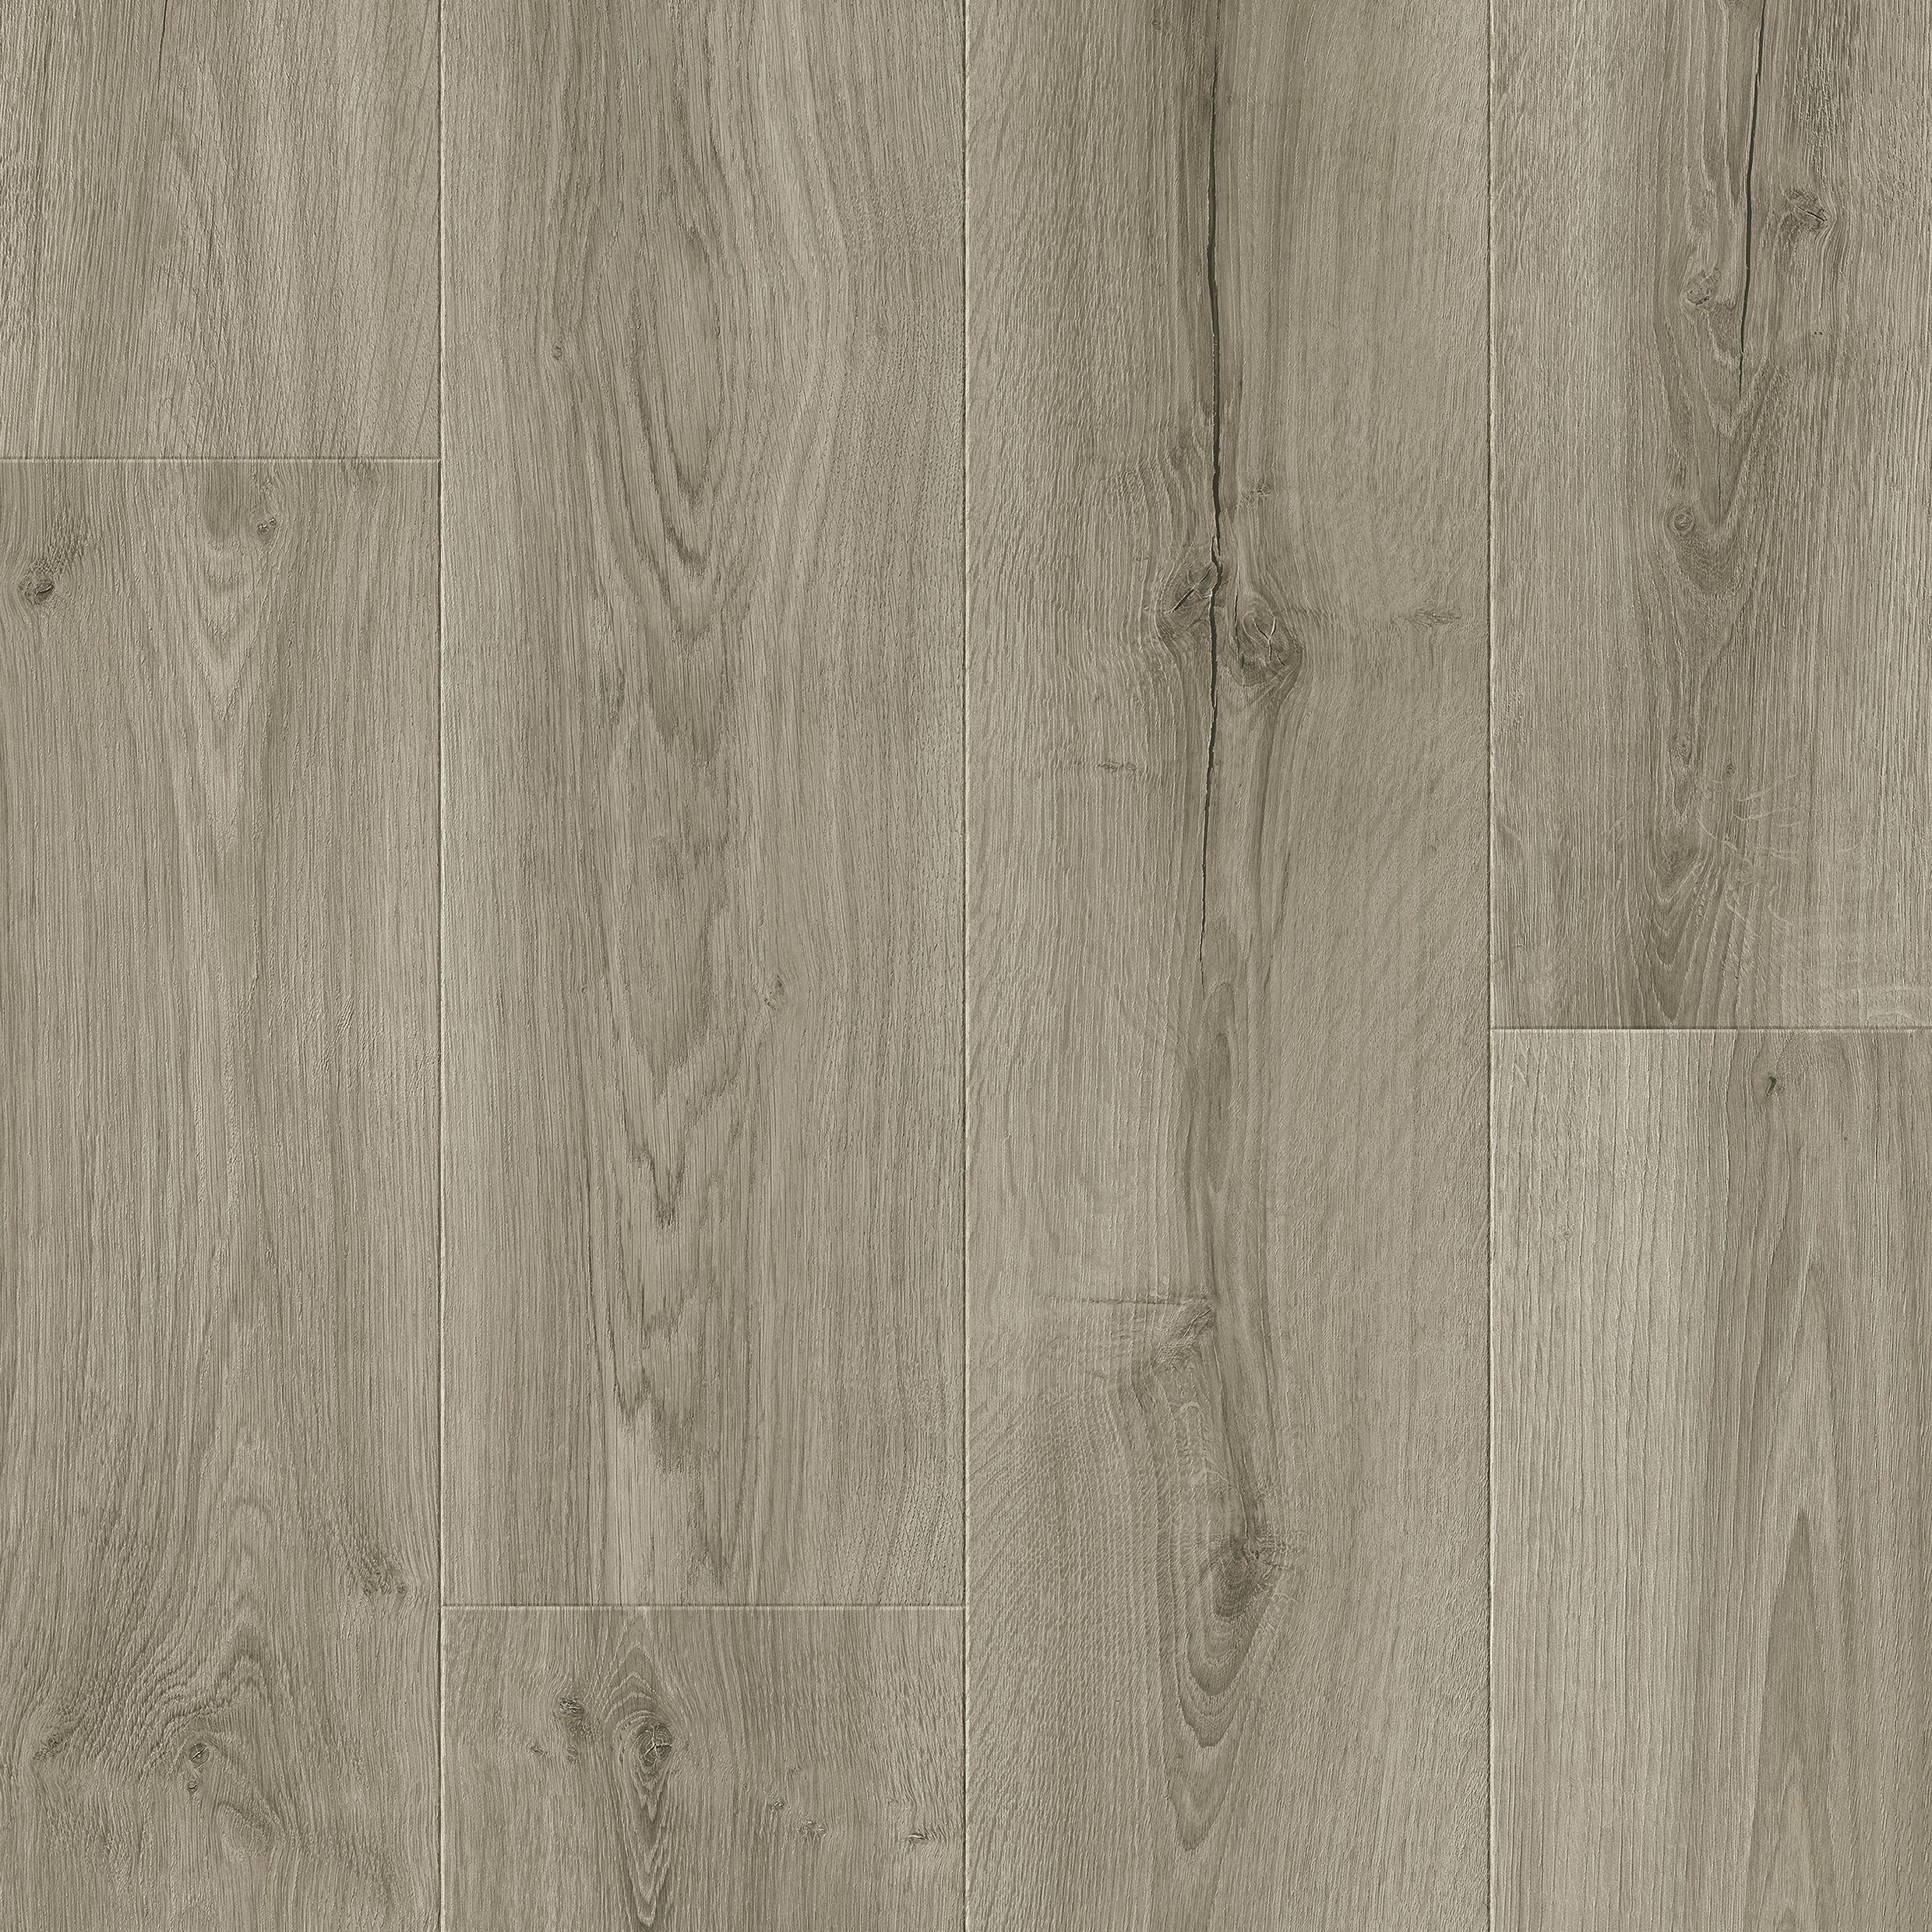 GoodHome Cleobury Grey Structured Oak effect Laminate flooring Sample